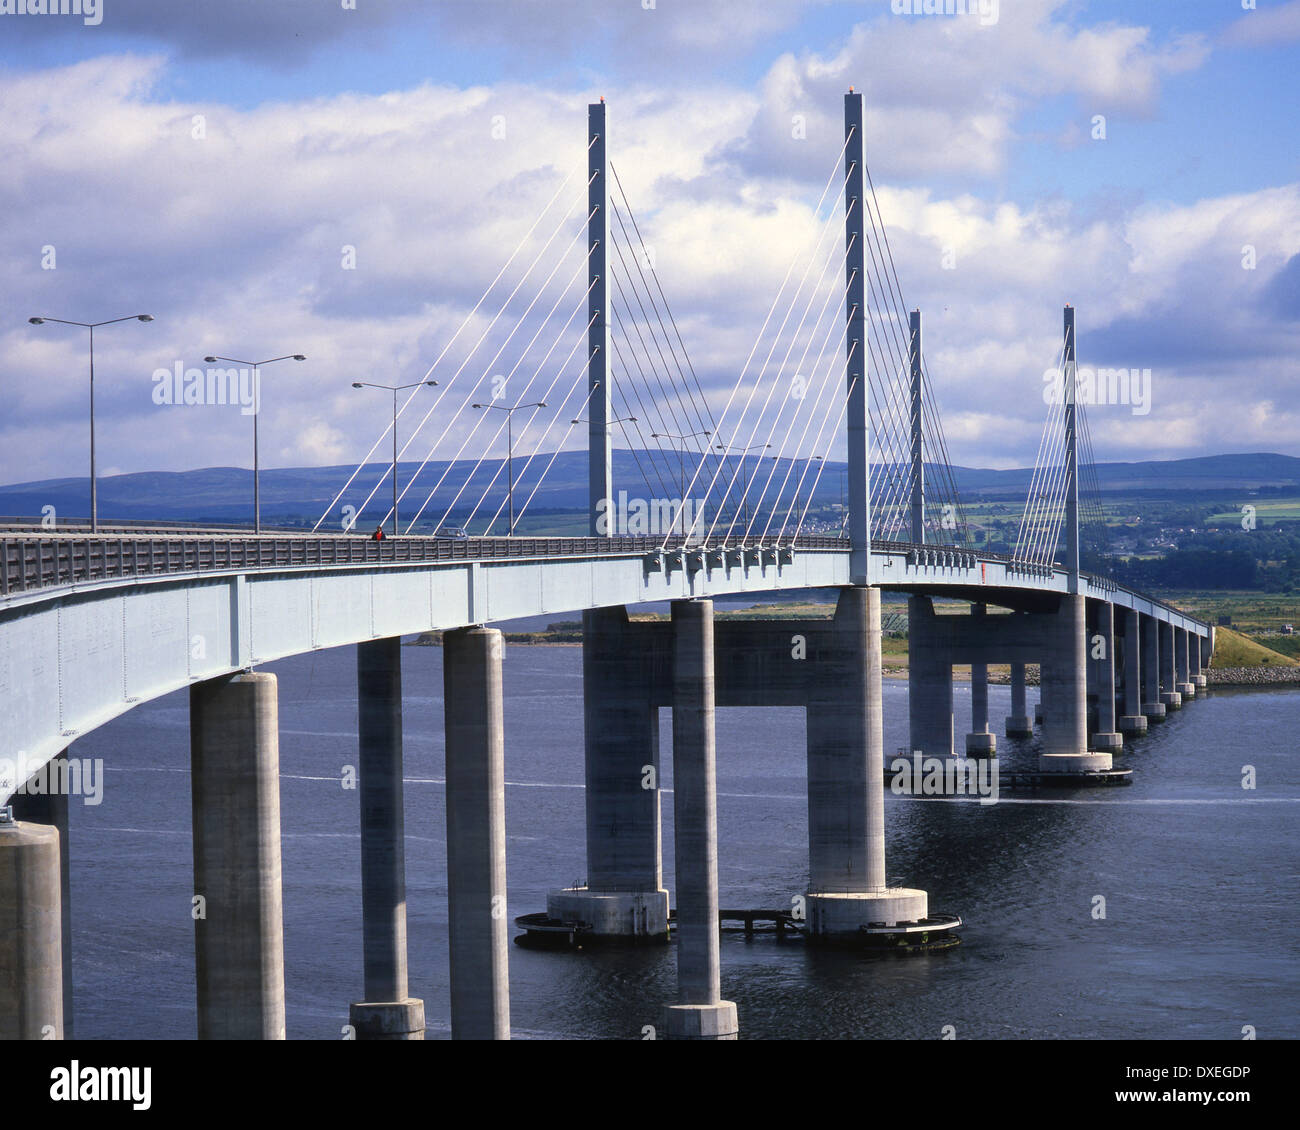 Il Kessock ponte sul beauly firth, progettata dall'ingegnere tedesco Hellmut Homberg. Foto Stock